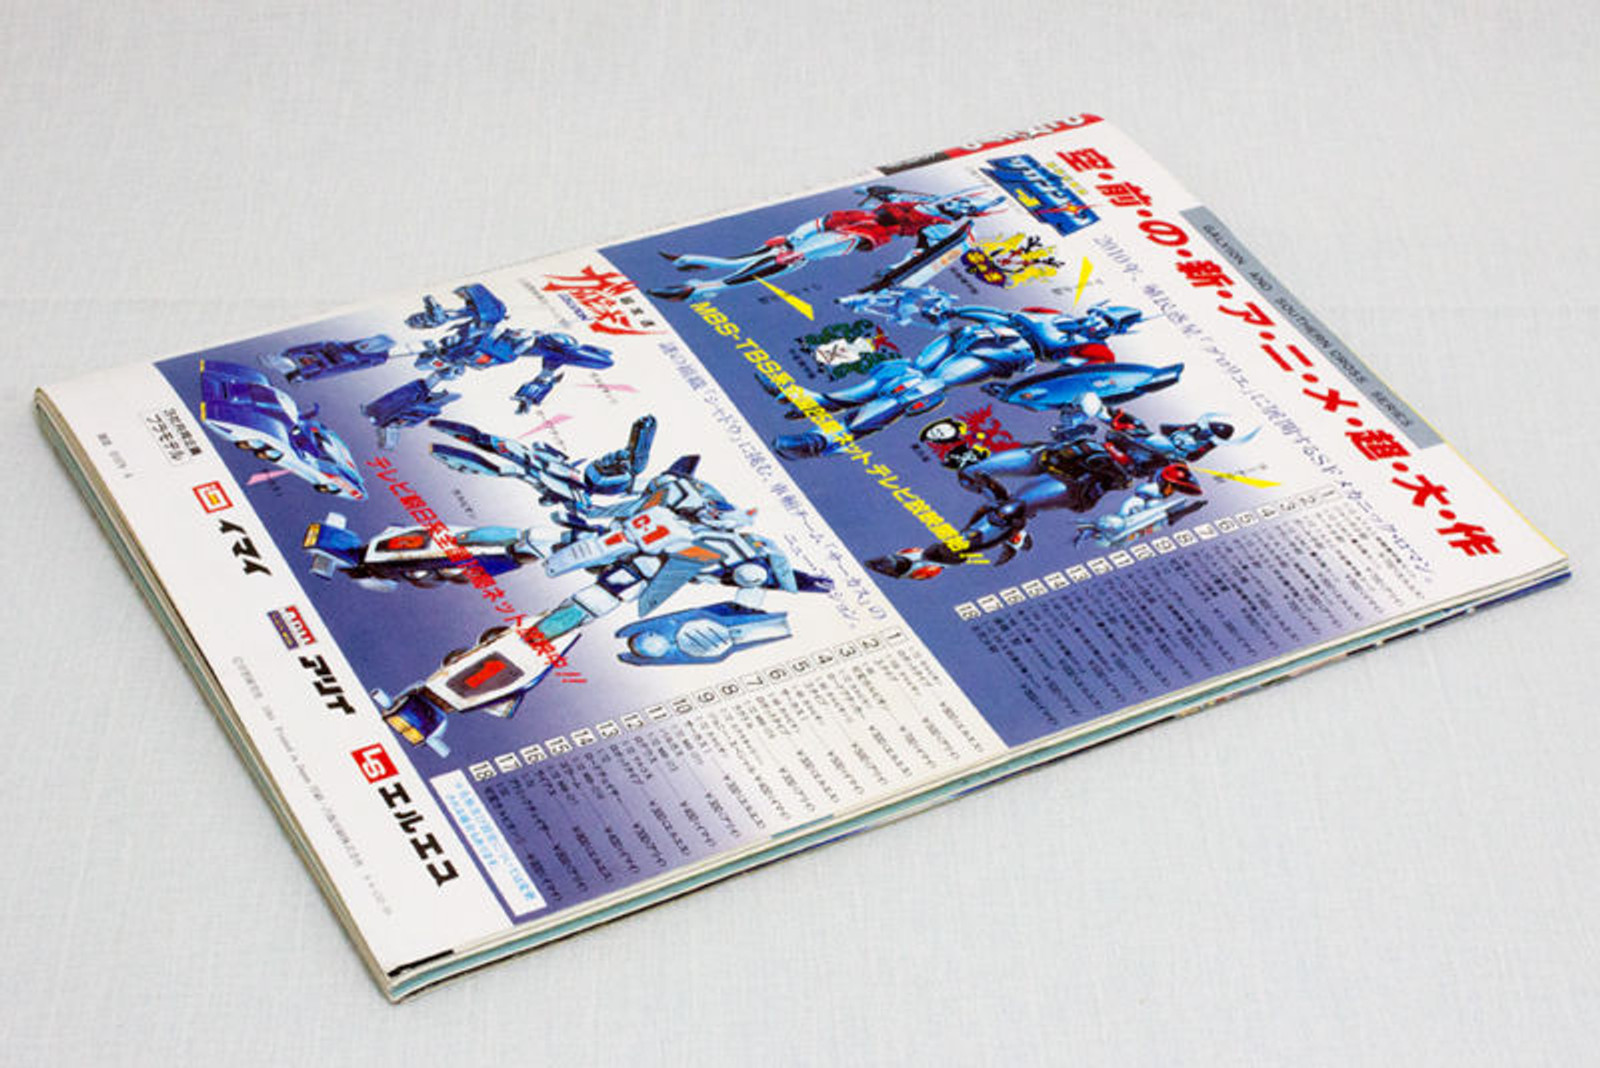 Animedia Japan Anime Magazine 06/1984 Vol.36 Gakken / MACROSS VIFAM L-GAIM